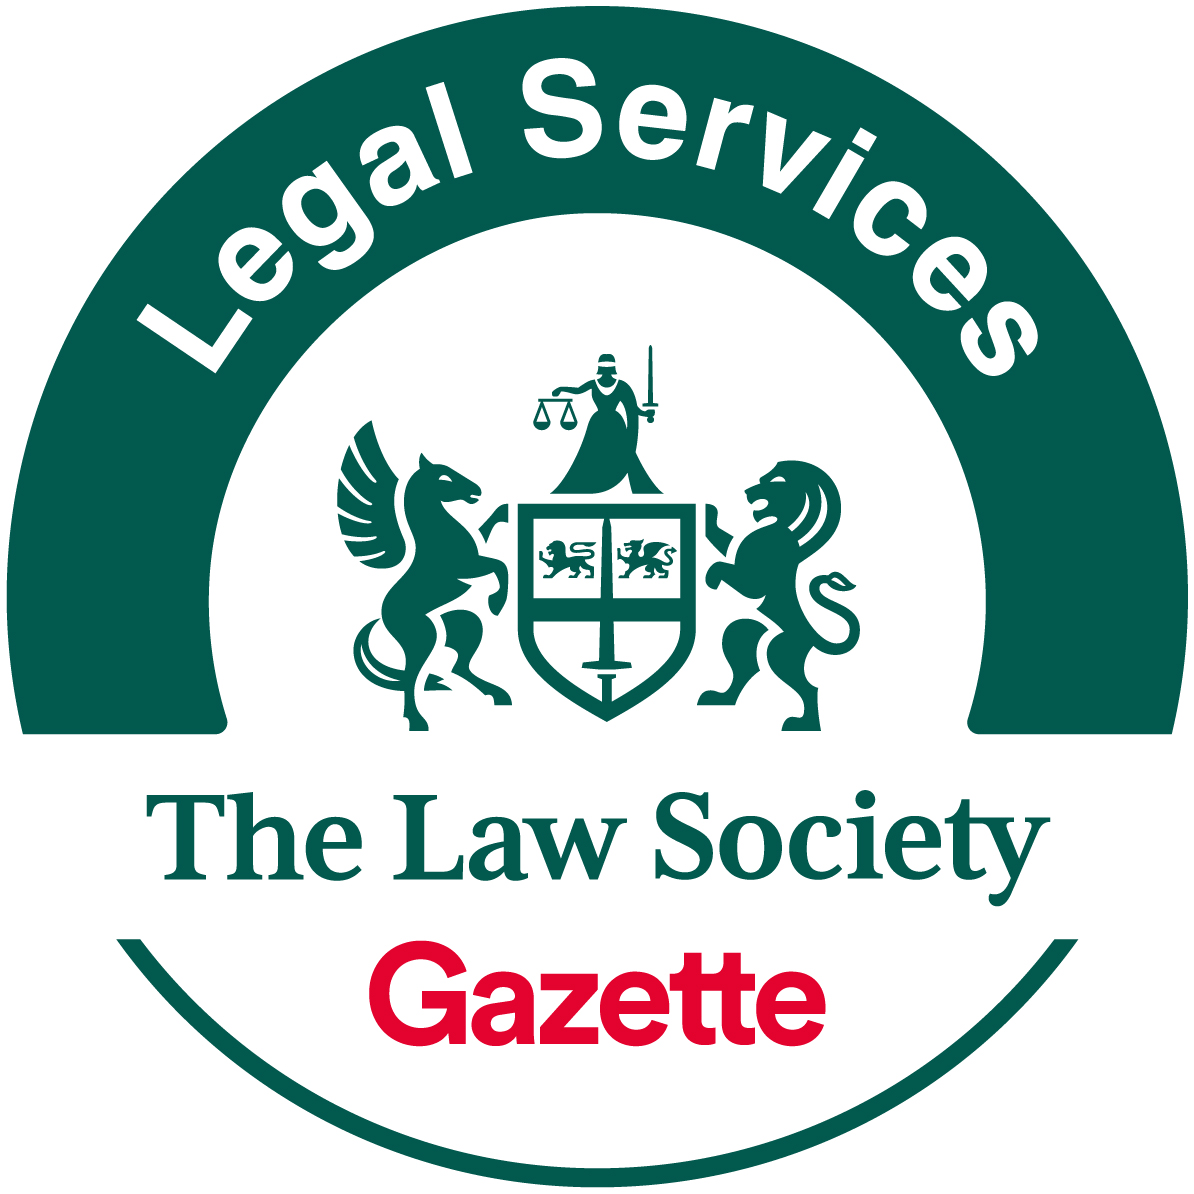 22859 Badges Legal Services Rgb